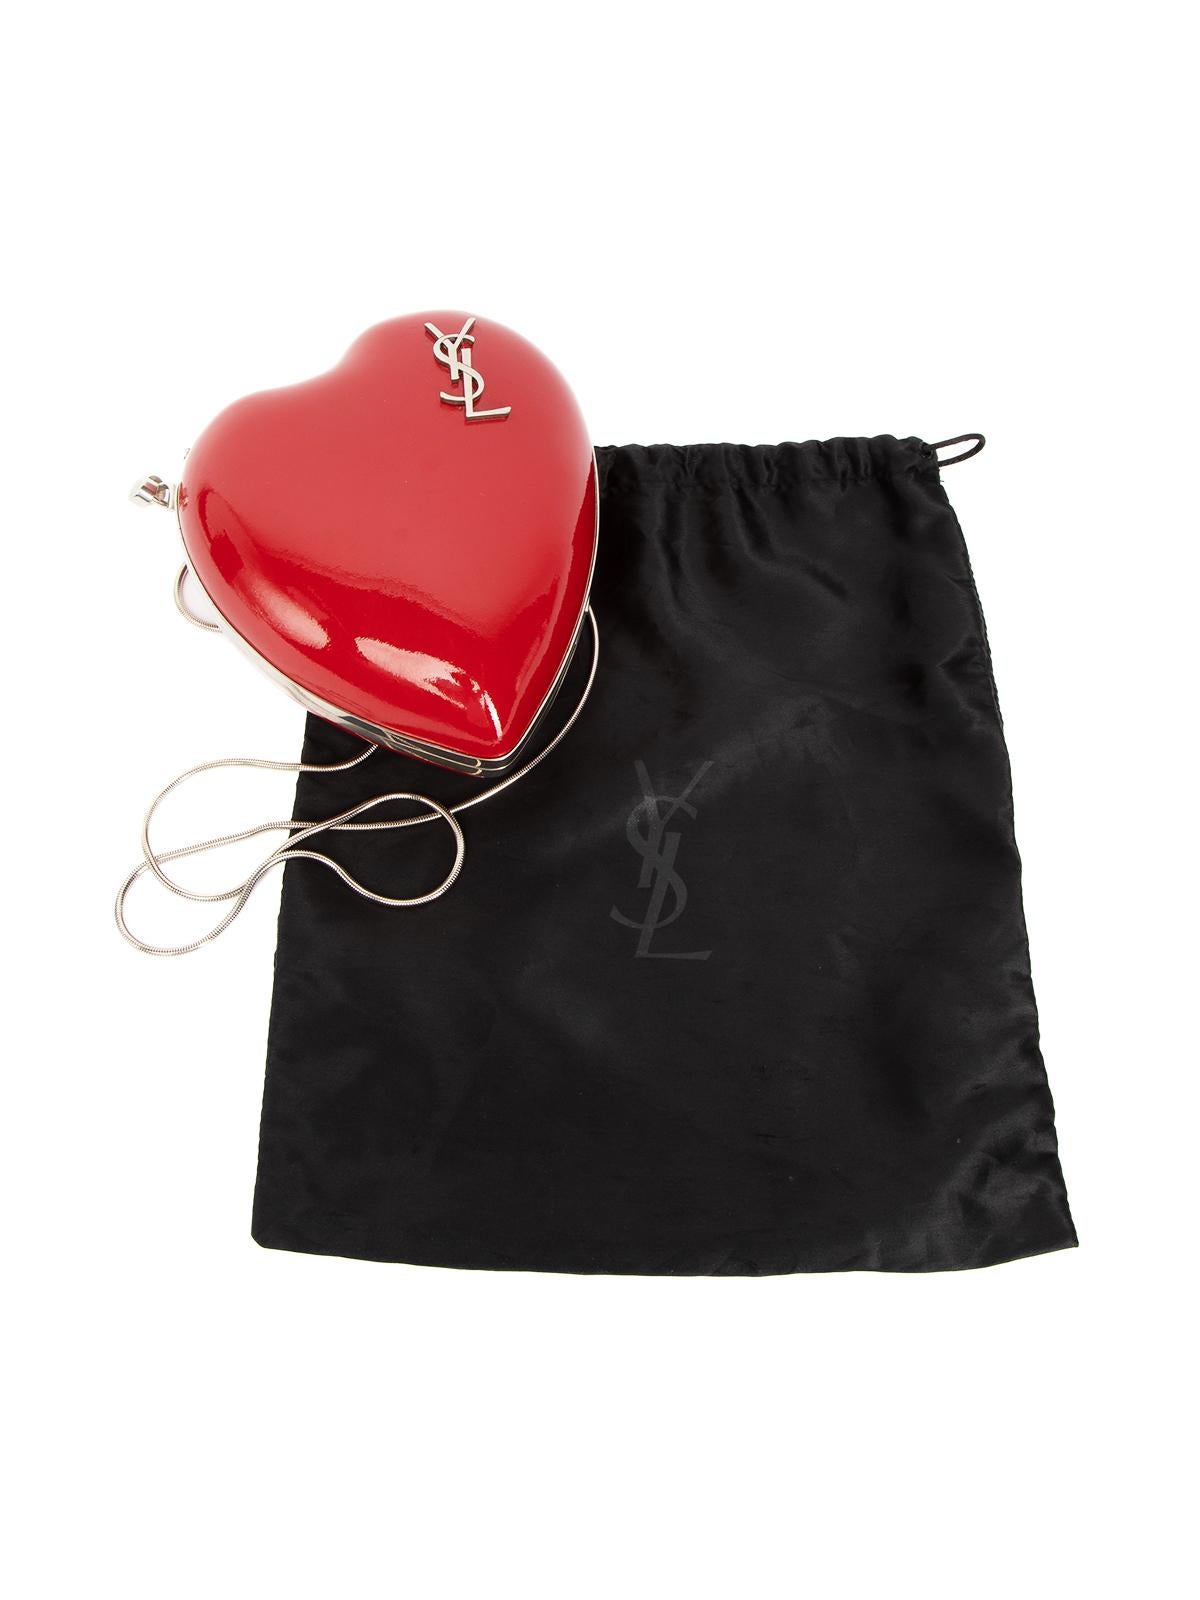 Pre-Loved Yves Saint Laurent Women's Heart Clutch Bag 2